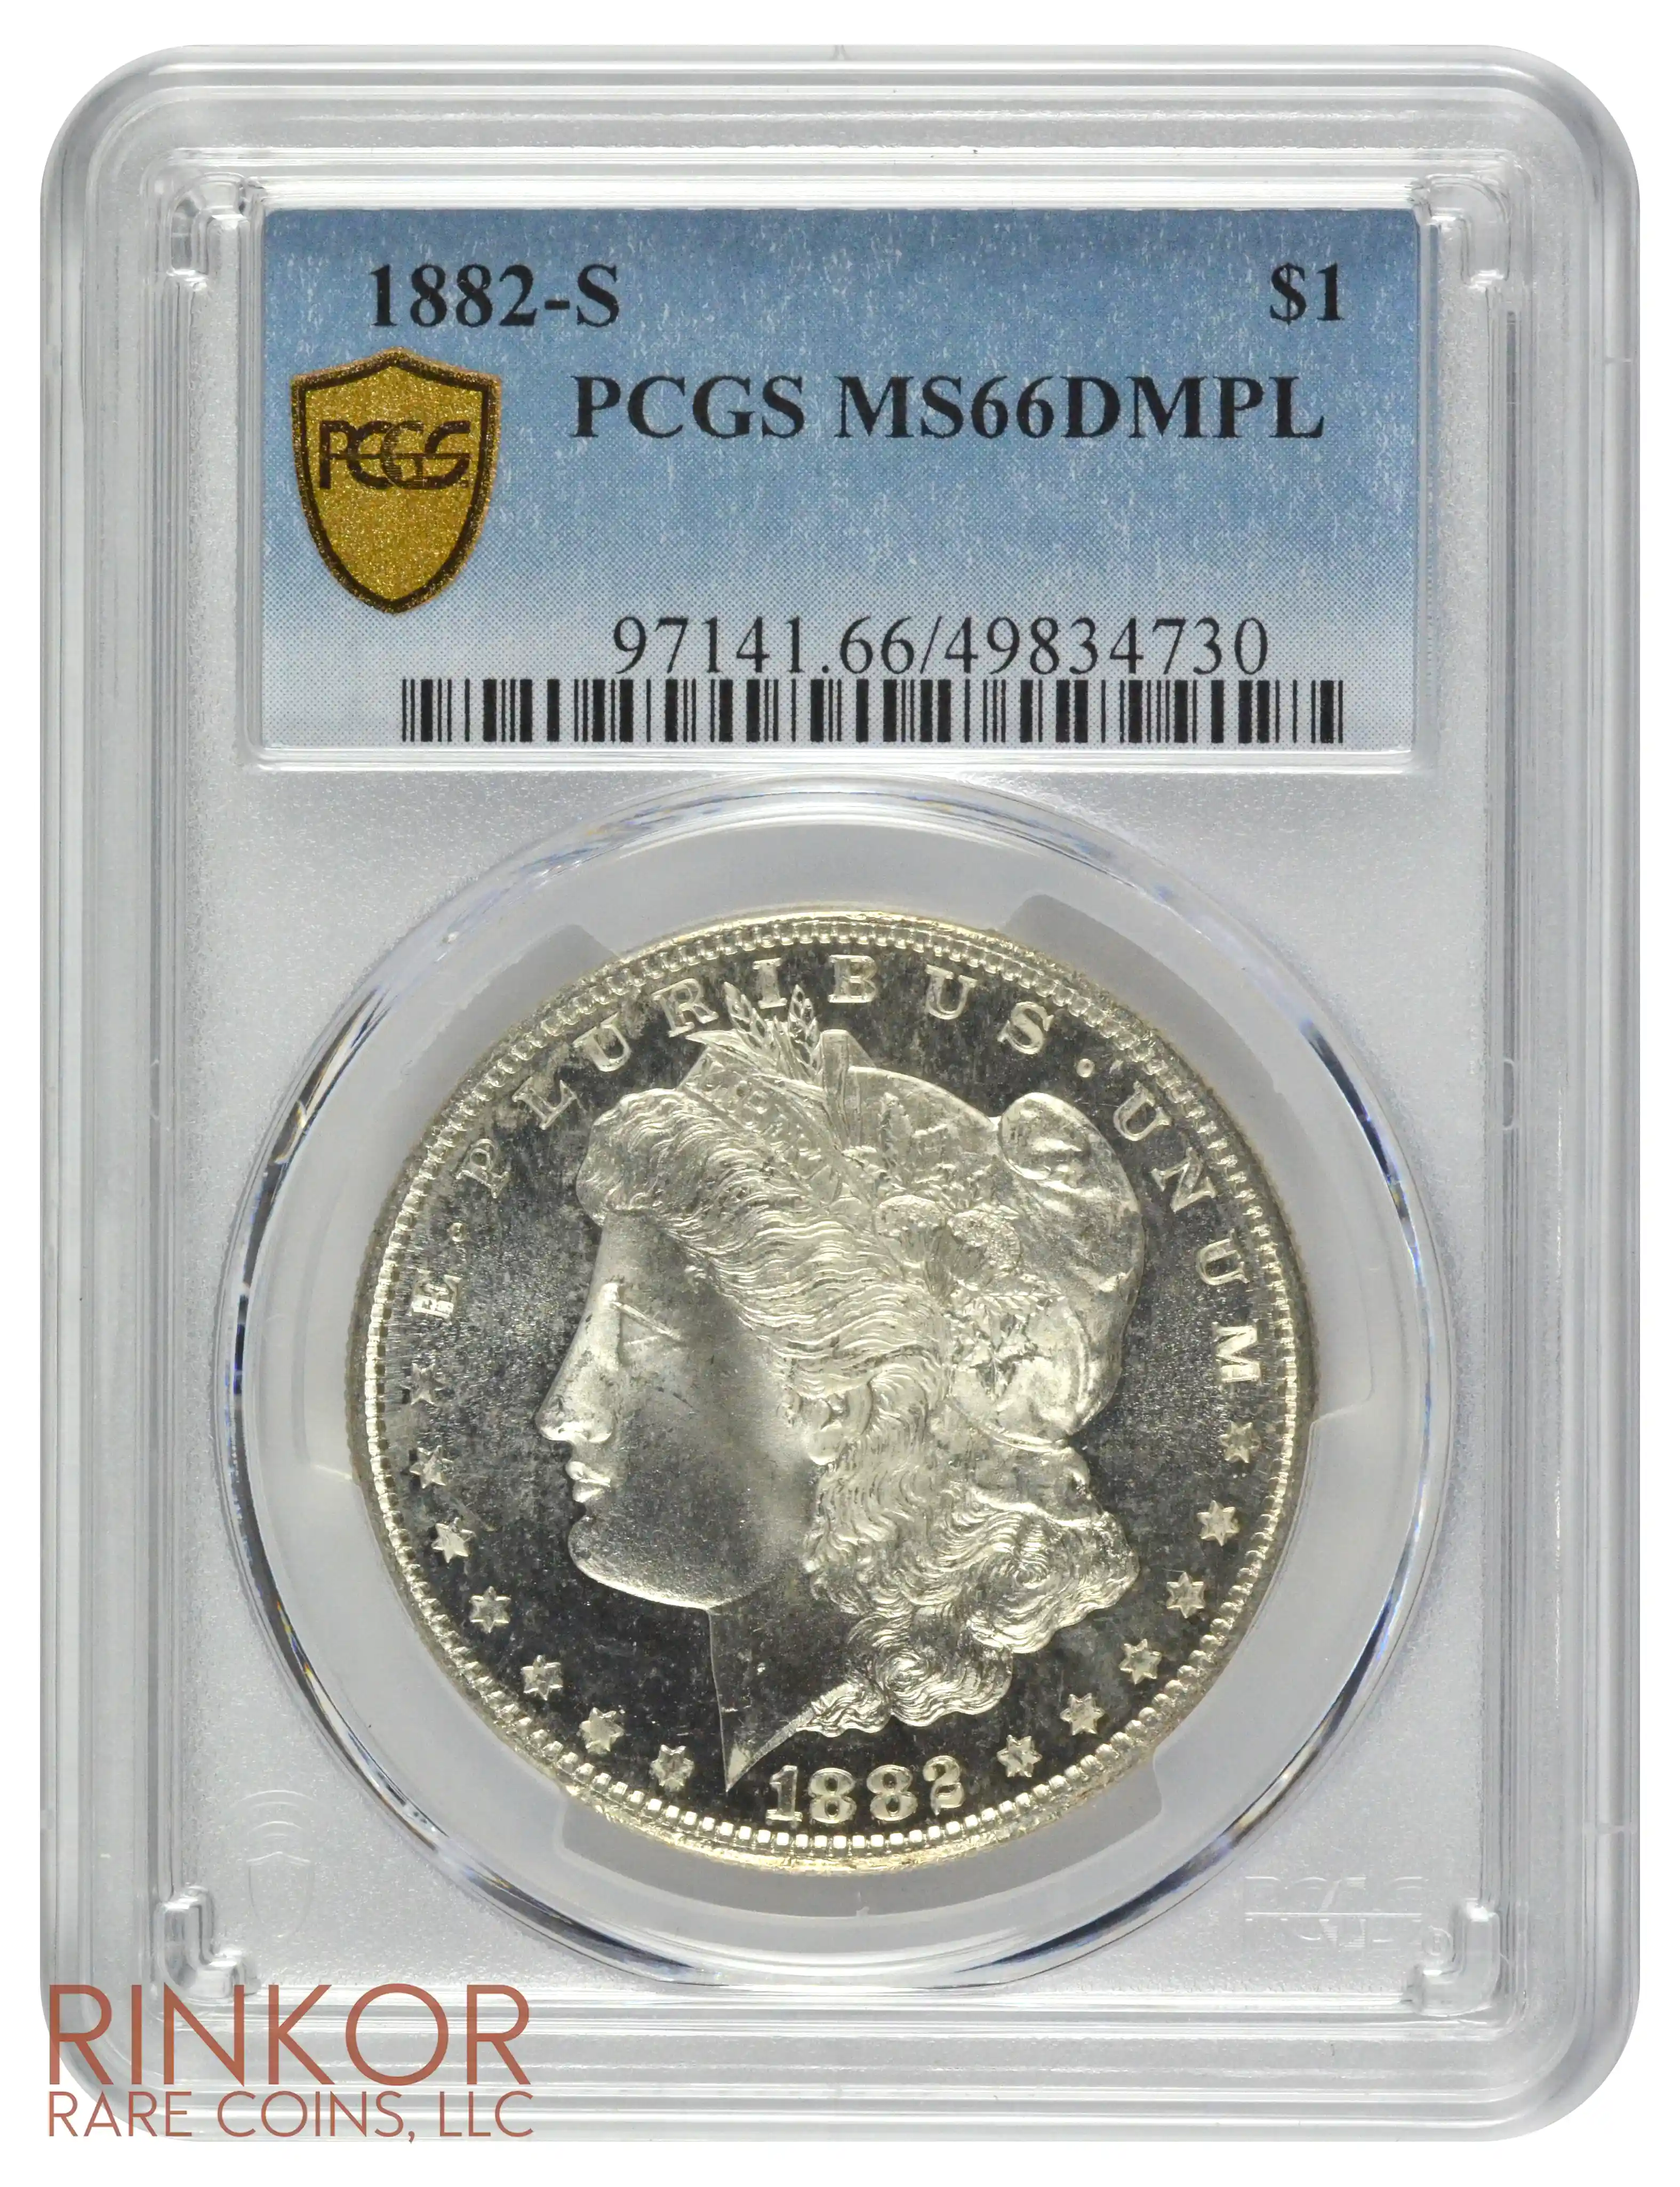 1882-S $1 PCGS MS 66 DMPL